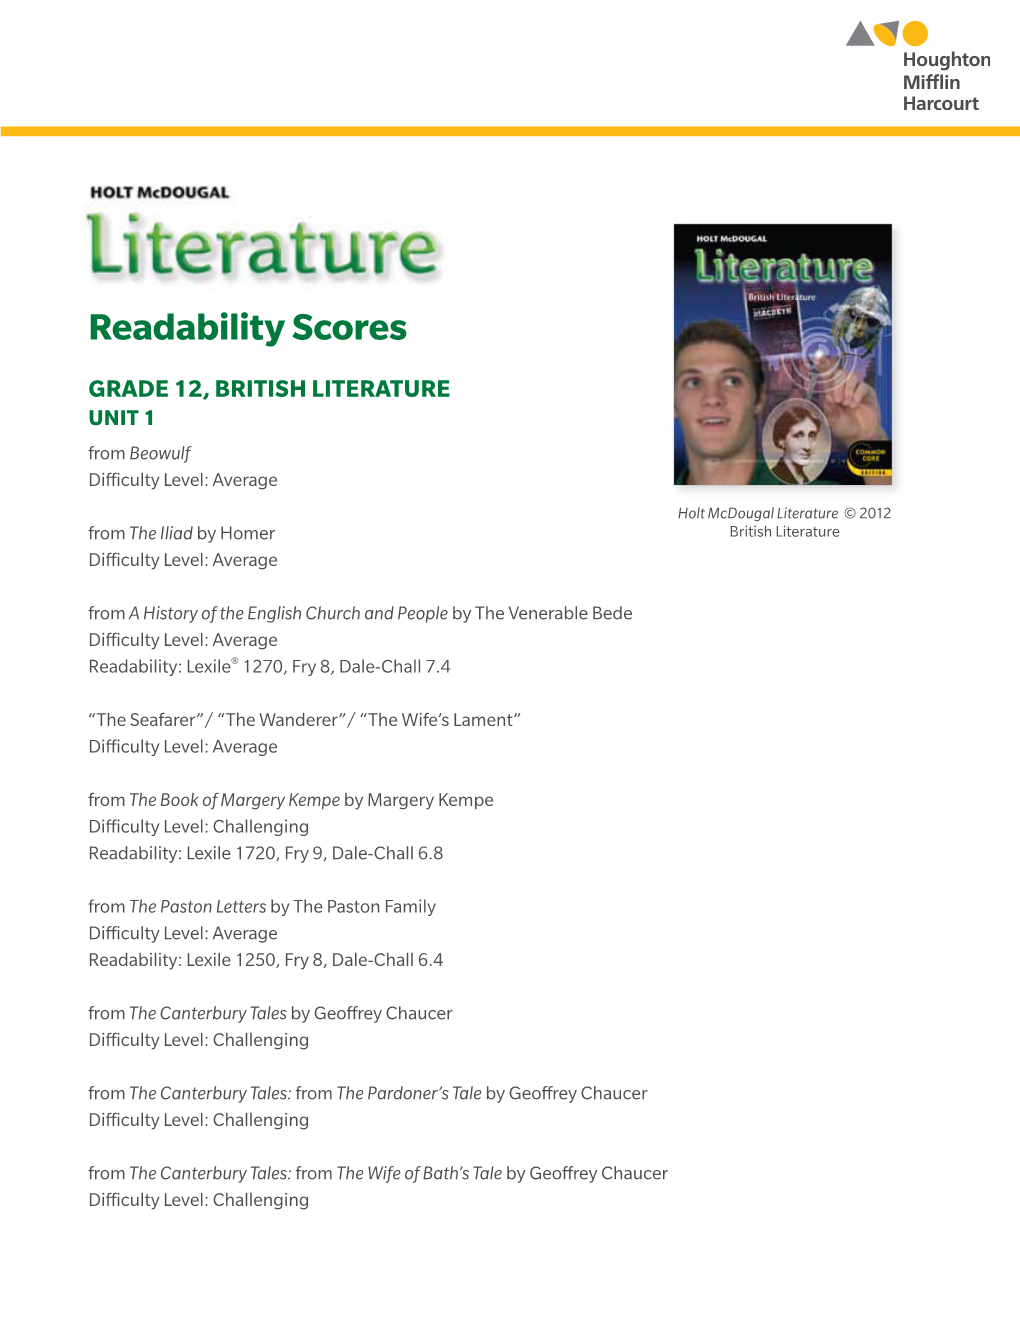 Readability Scores